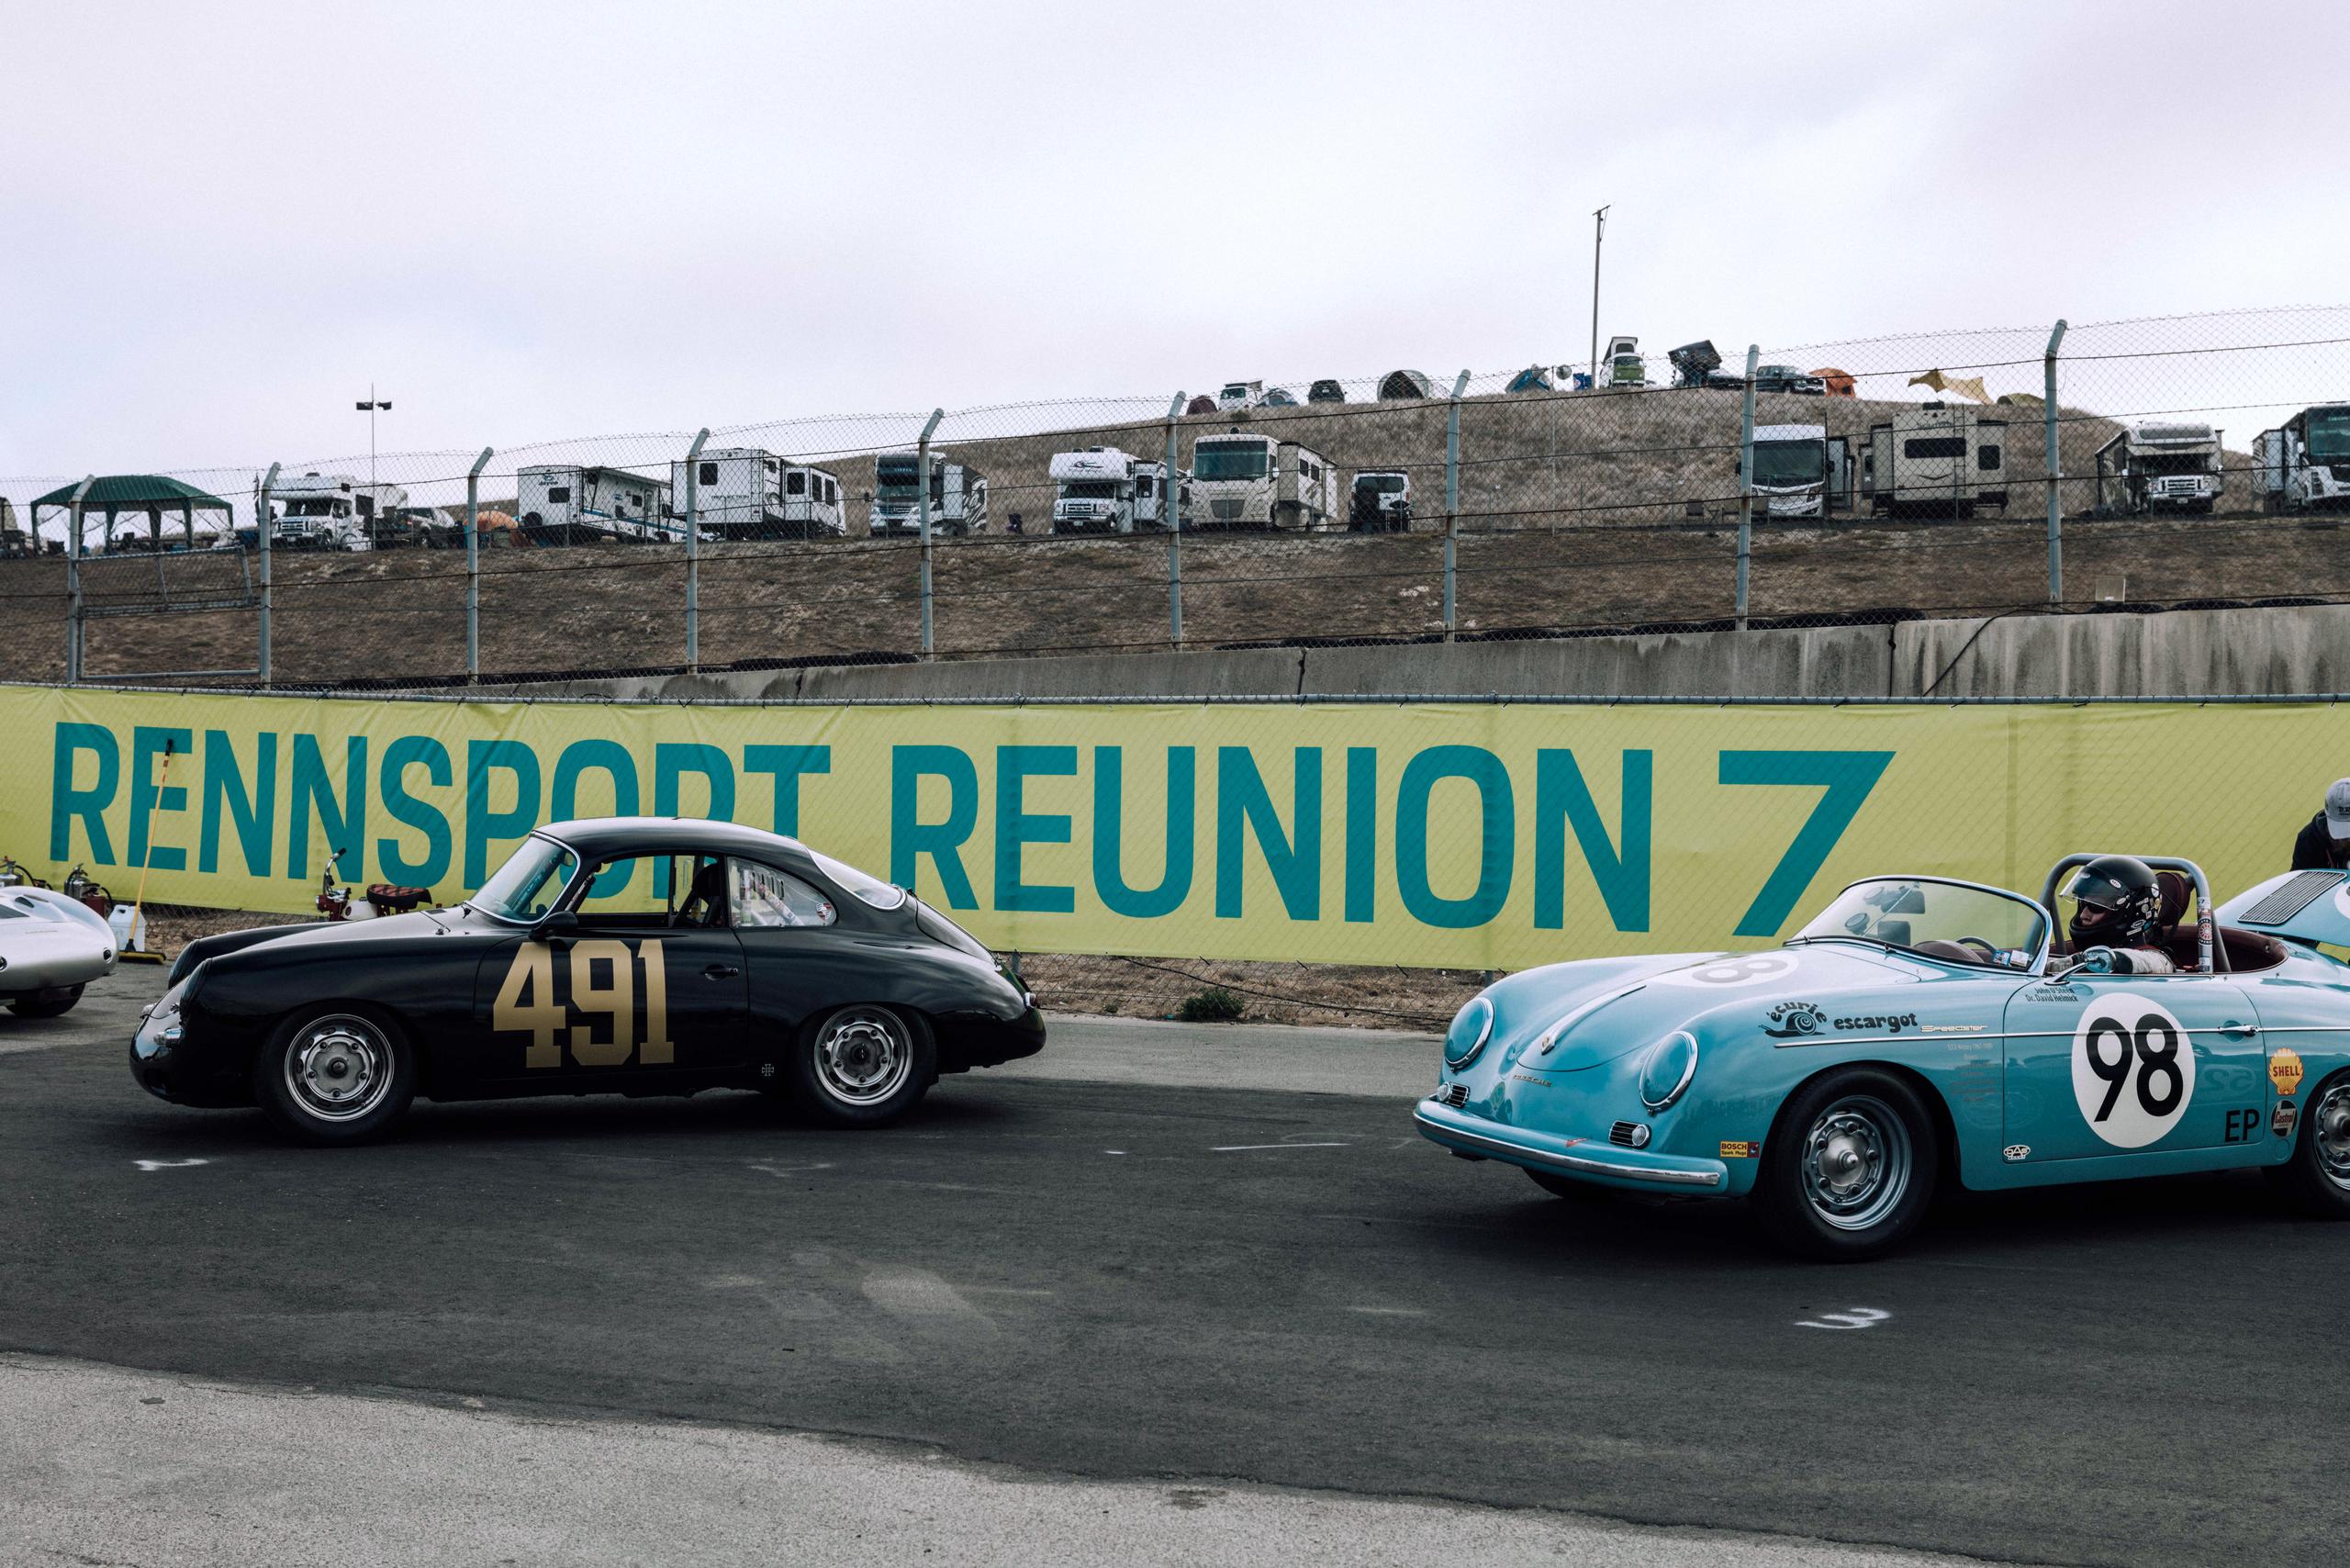 Two vintage Porsche's in front of Rennsport Reunion 7 banner